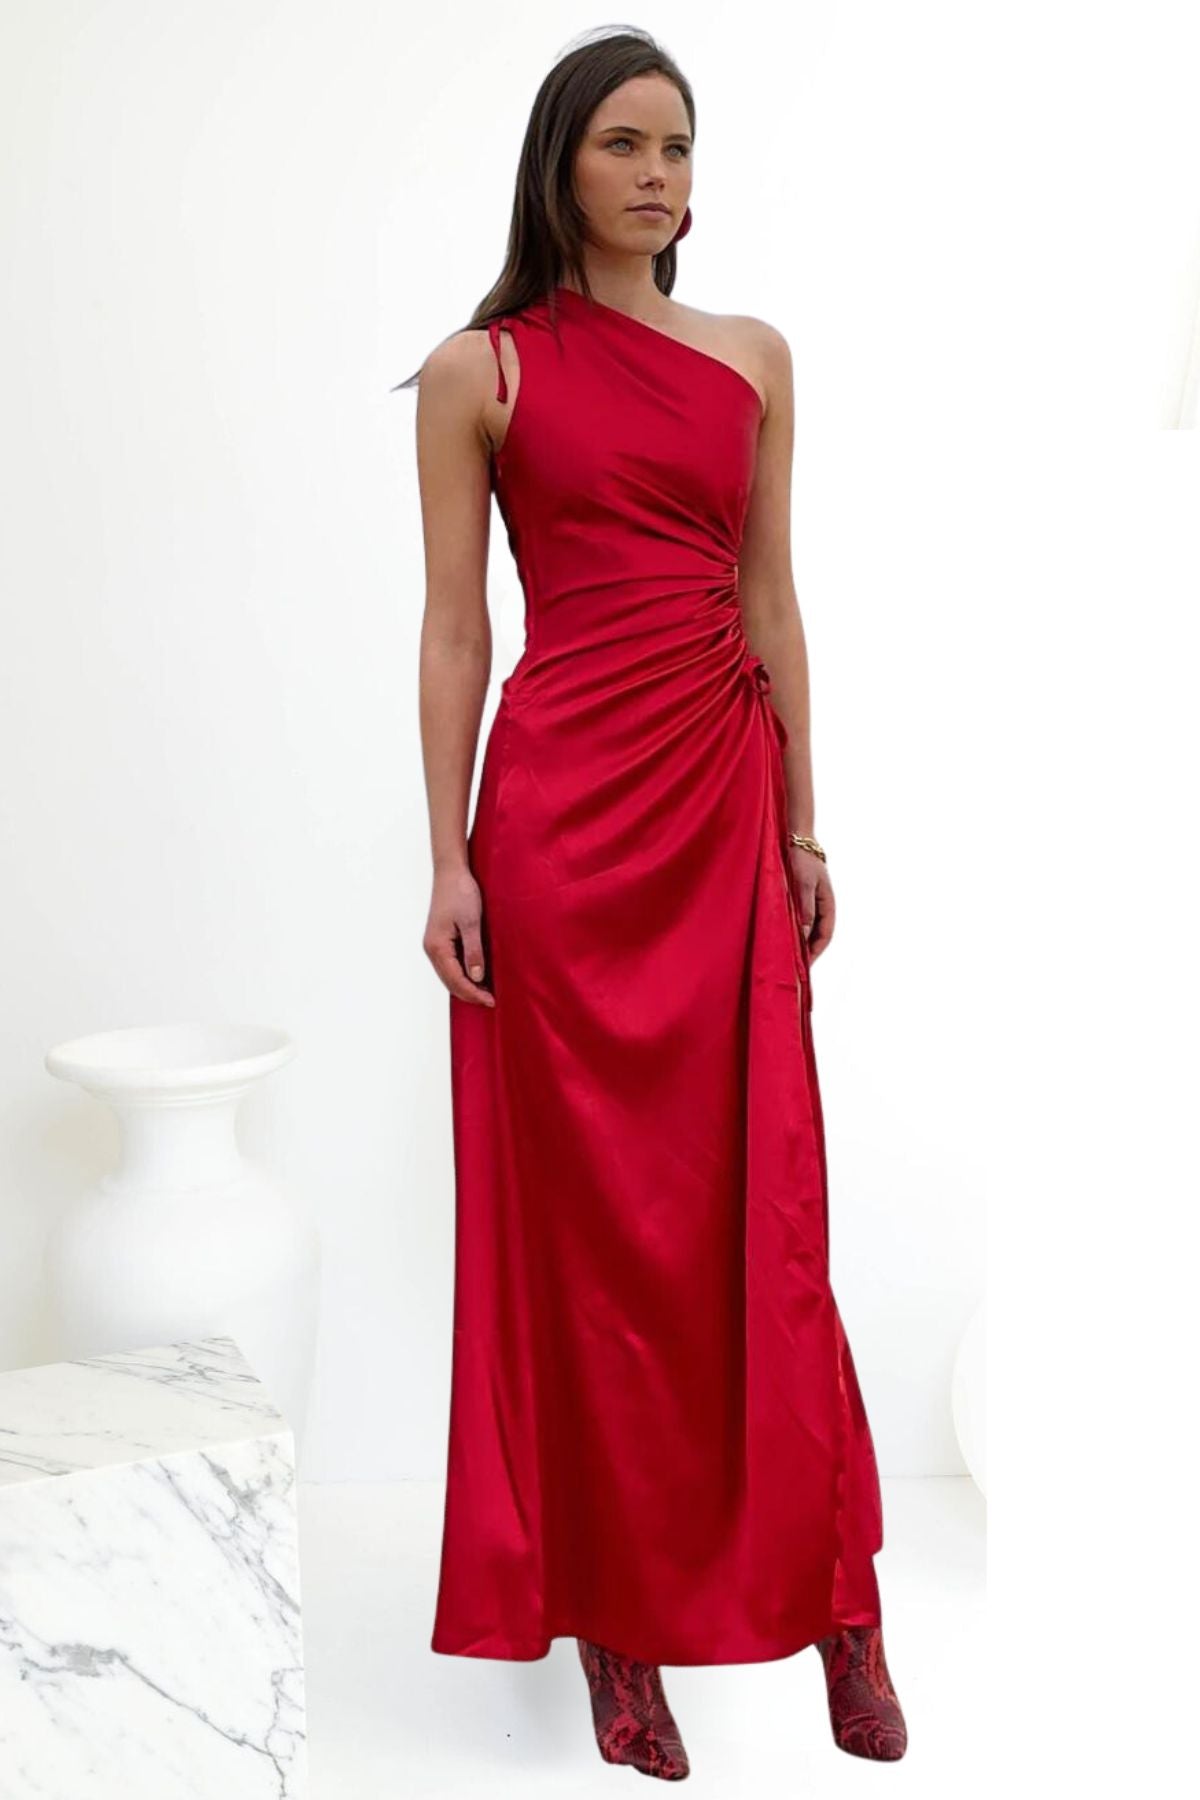 SONYA MODA Nour Scarlet Red Dress - RRP $380